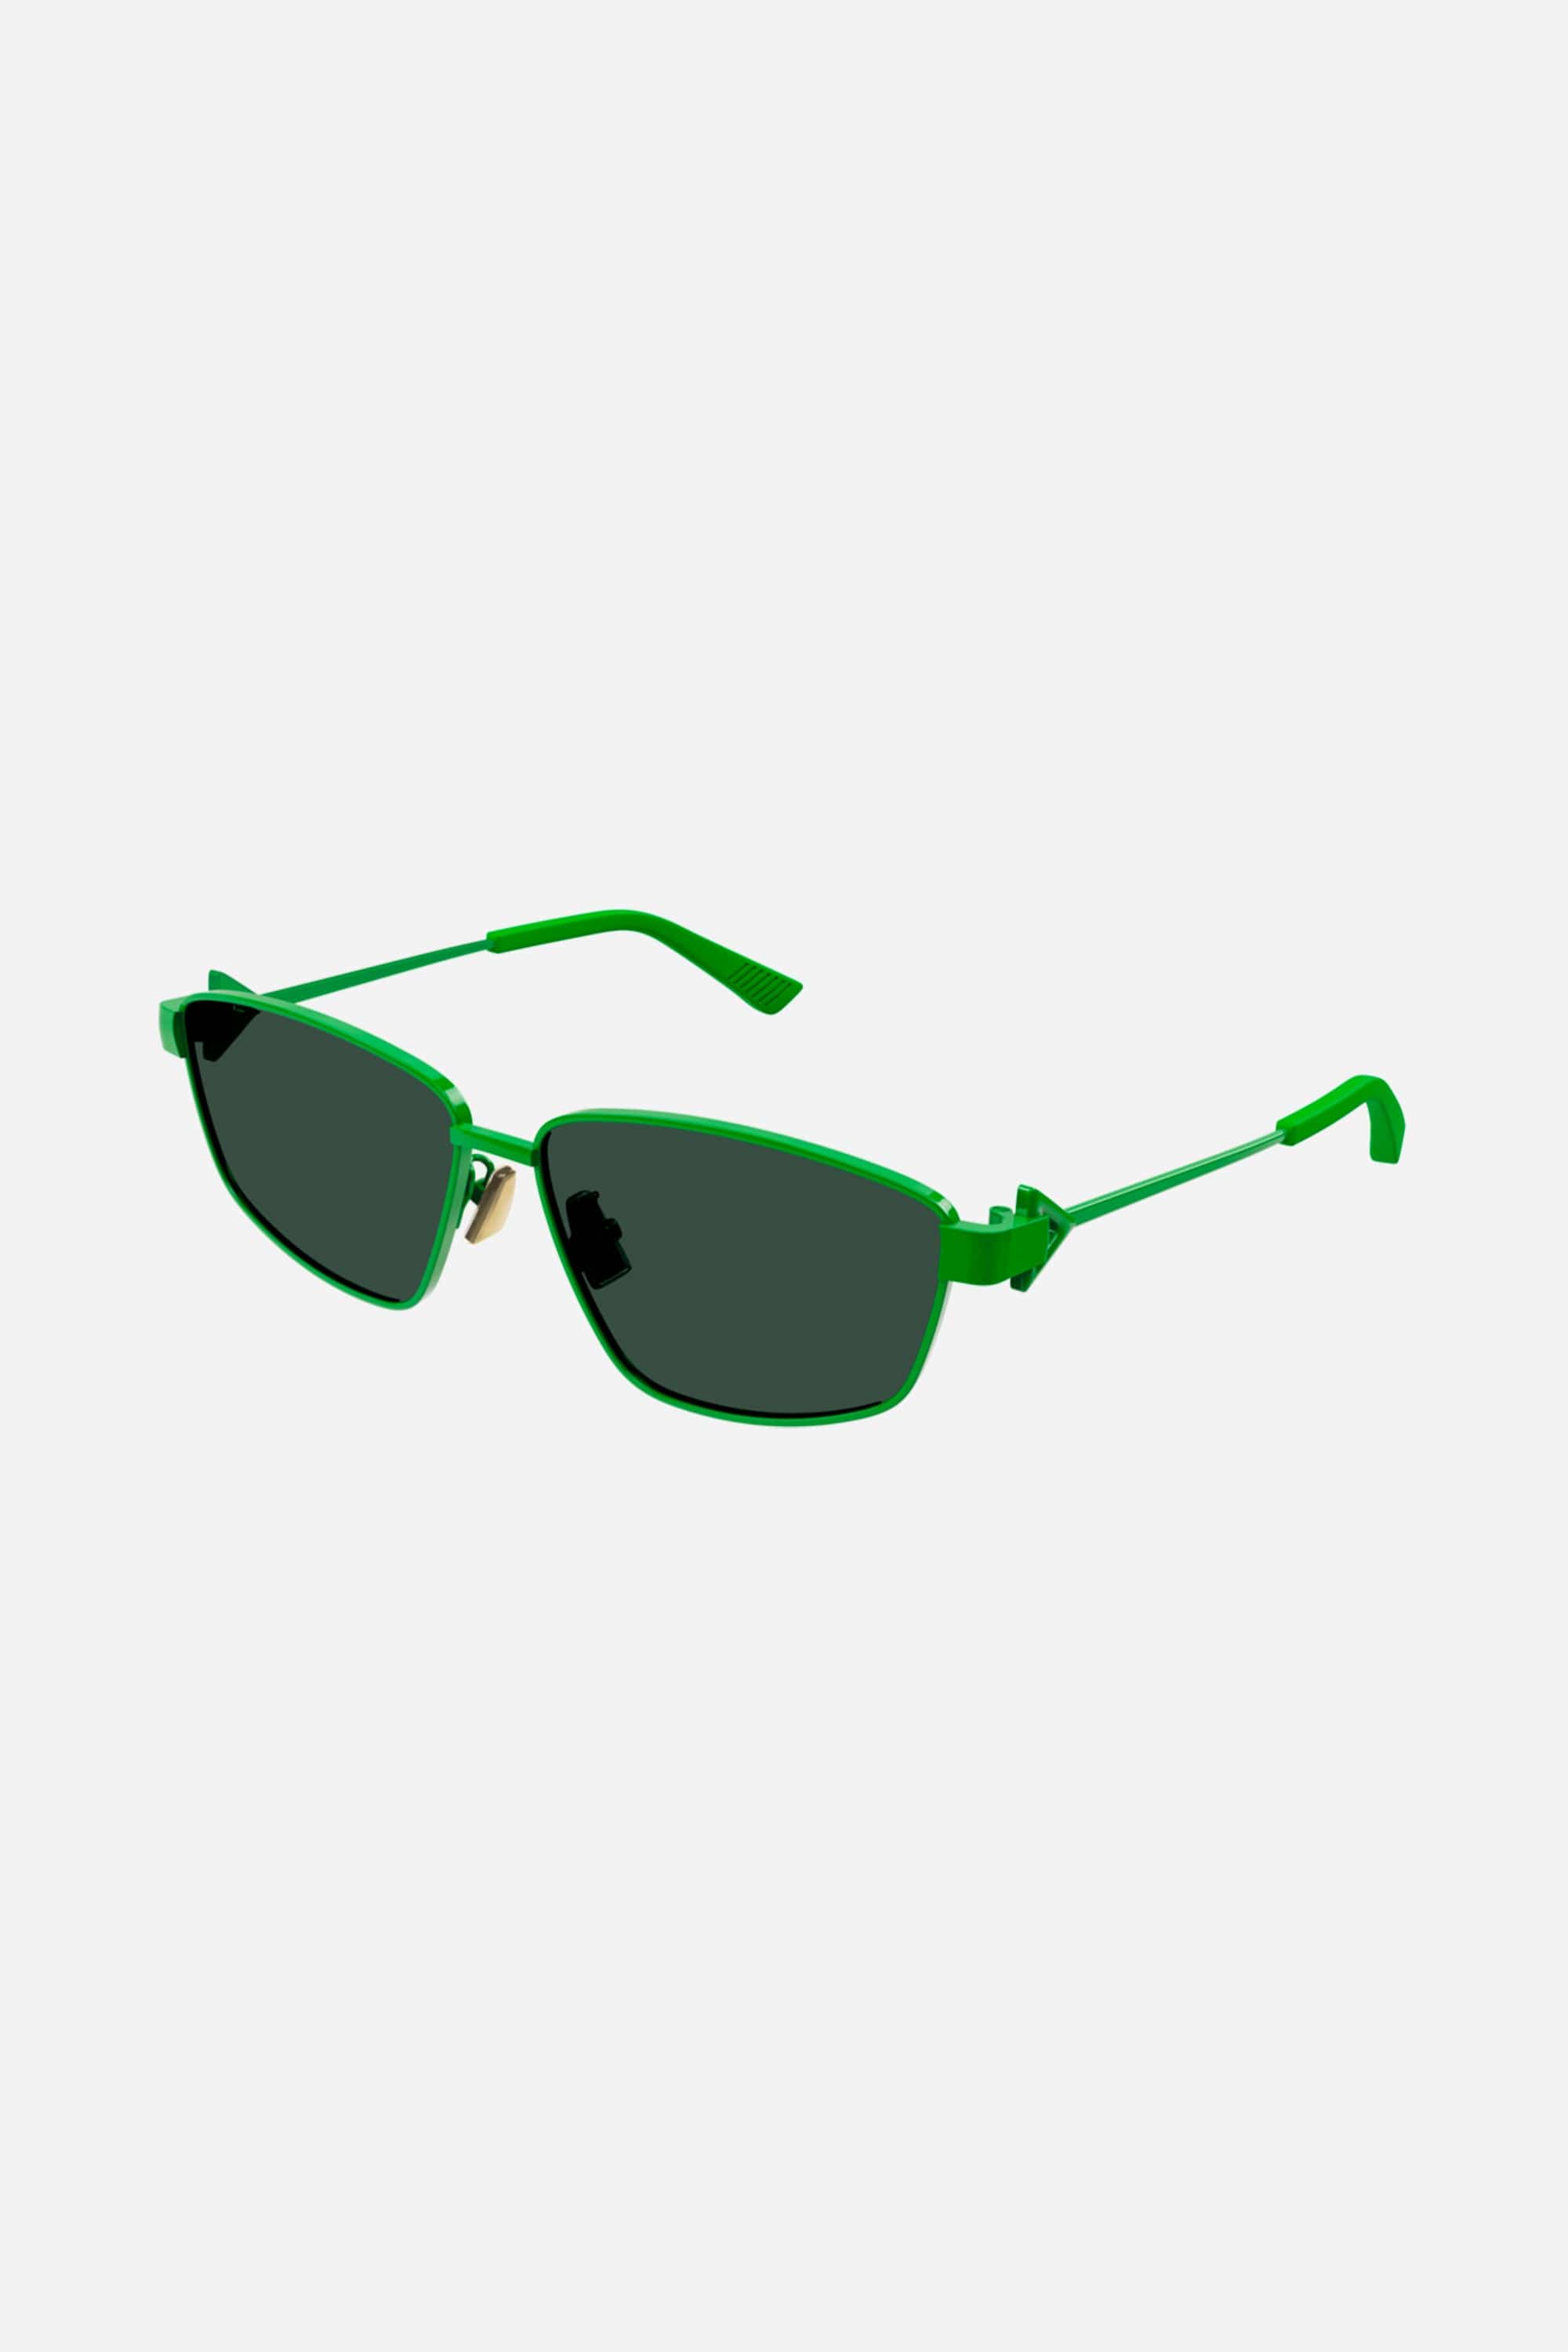 Bottega Veneta rectangular metal green sunglasses - Eyewear Club